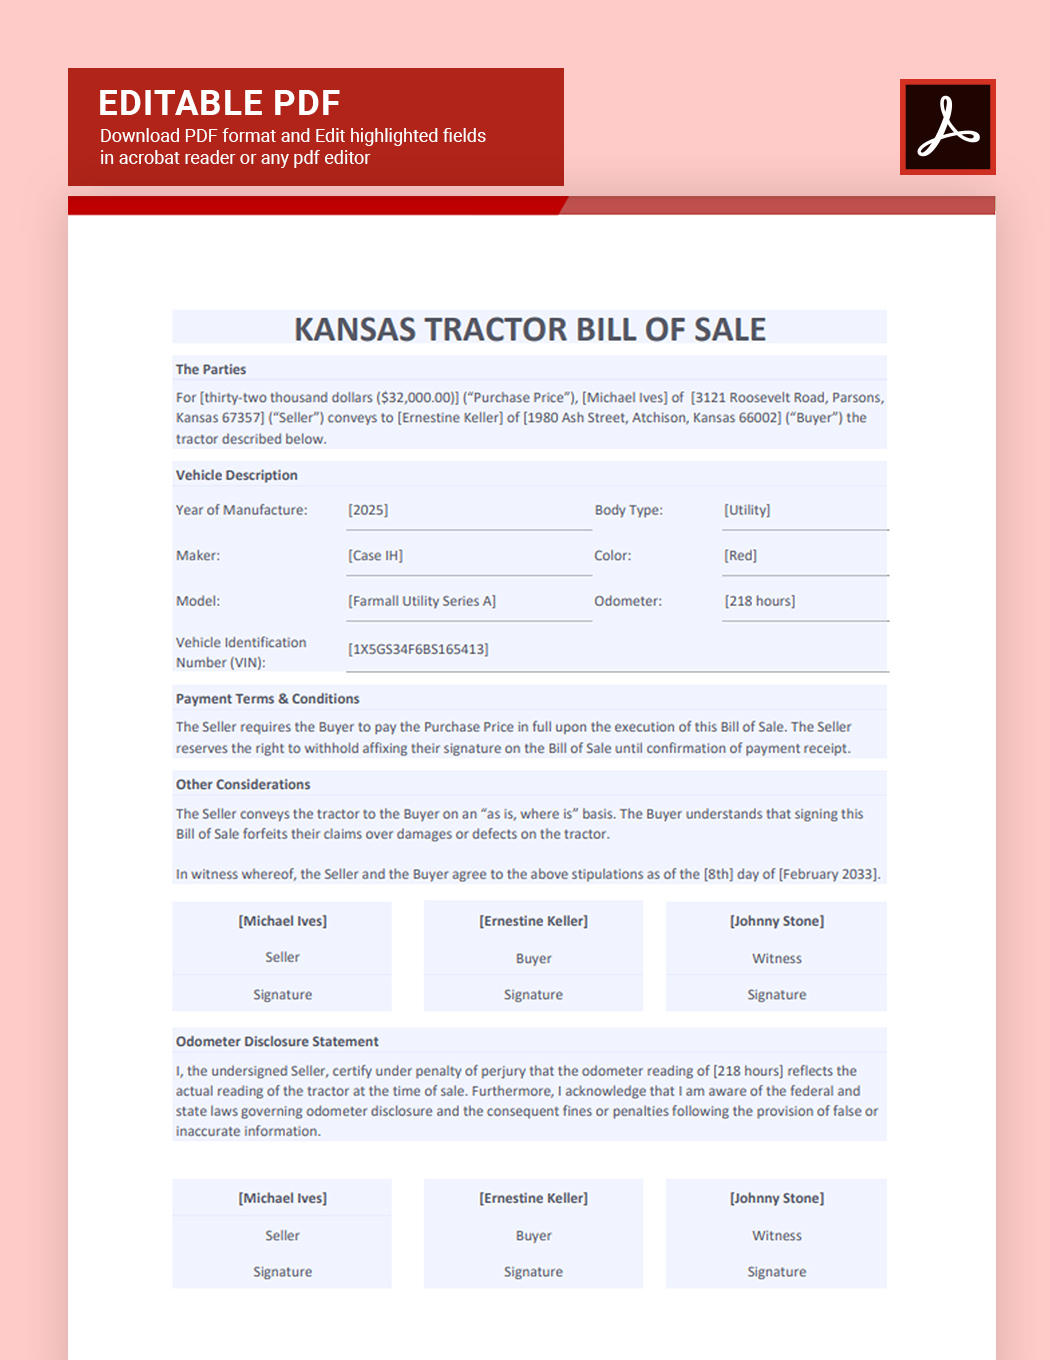 Kansas Tractor Bill of Sale Template